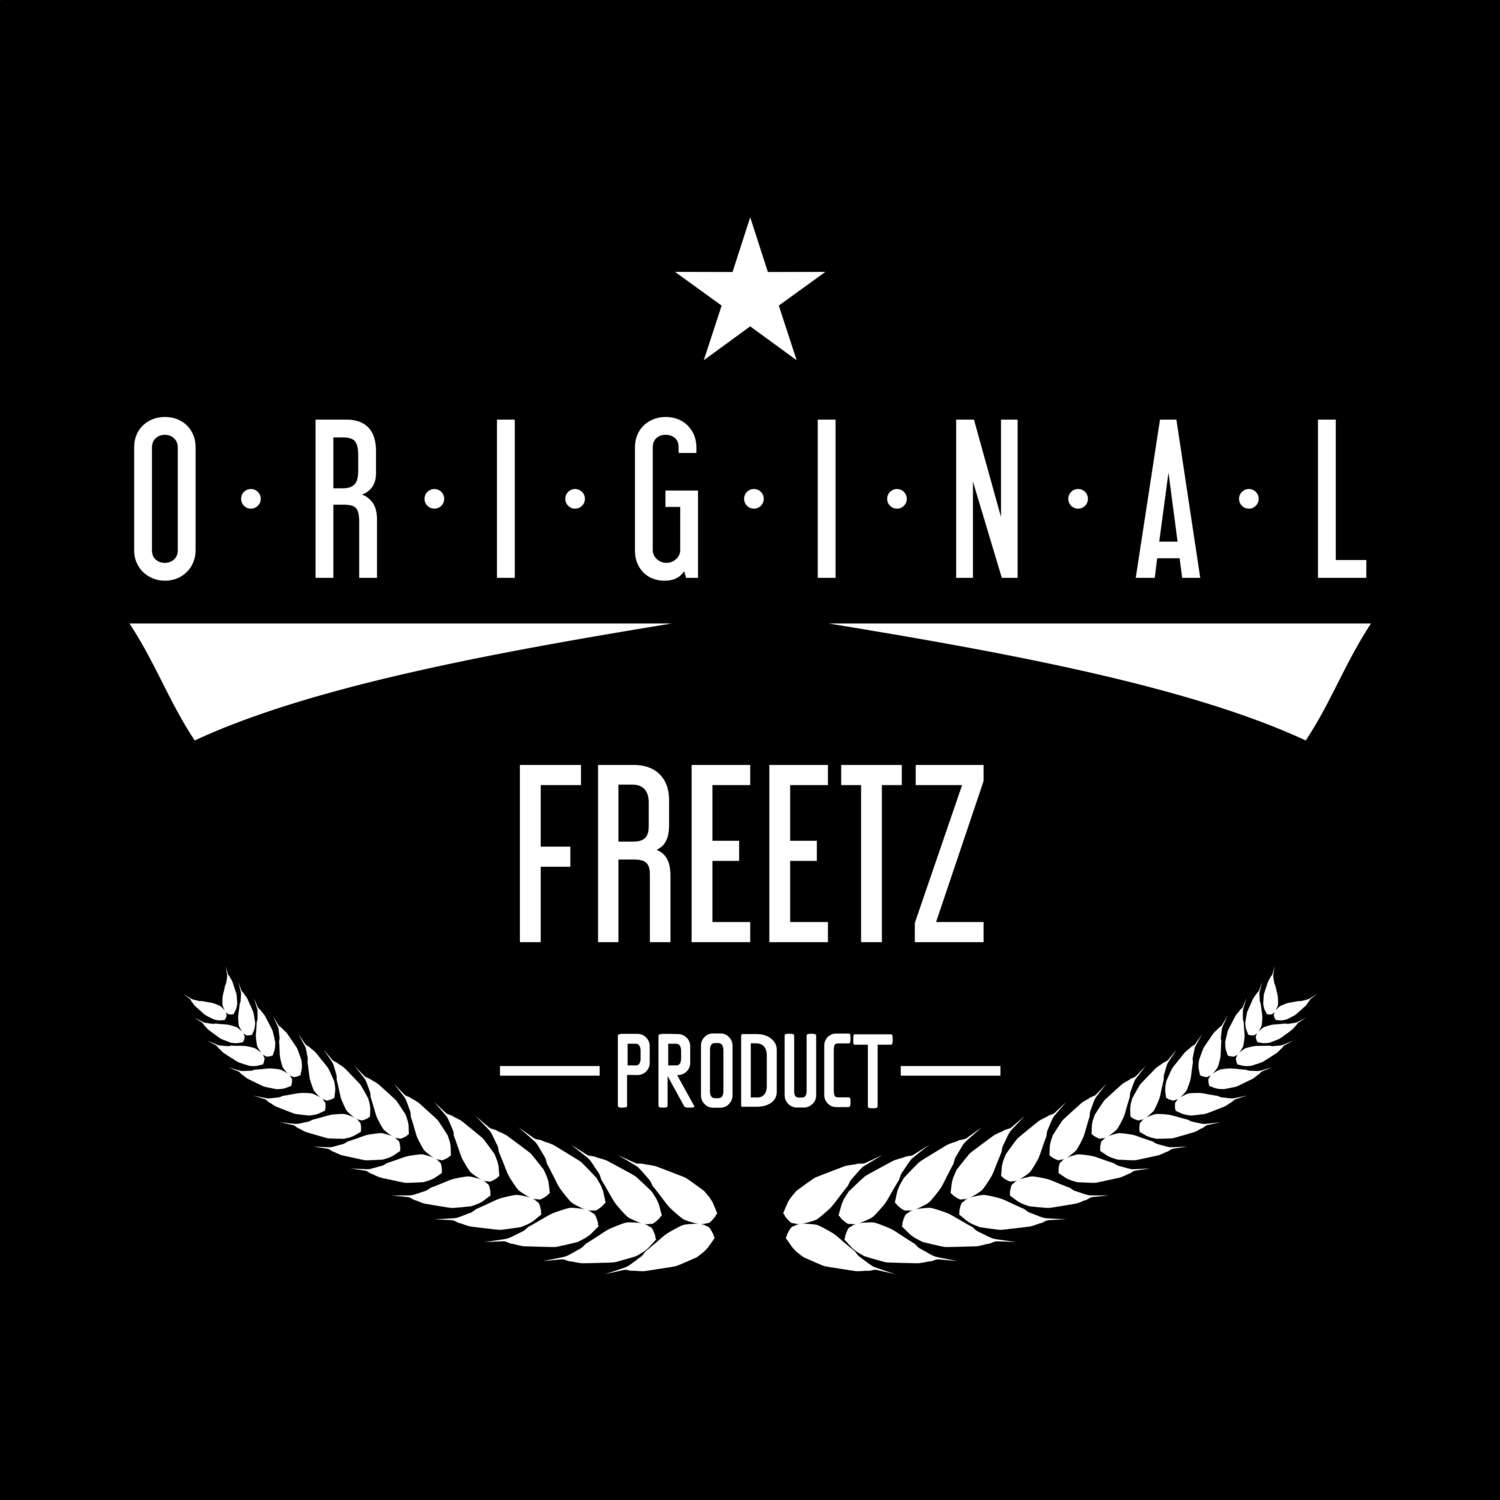 Freetz T-Shirt »Original Product«